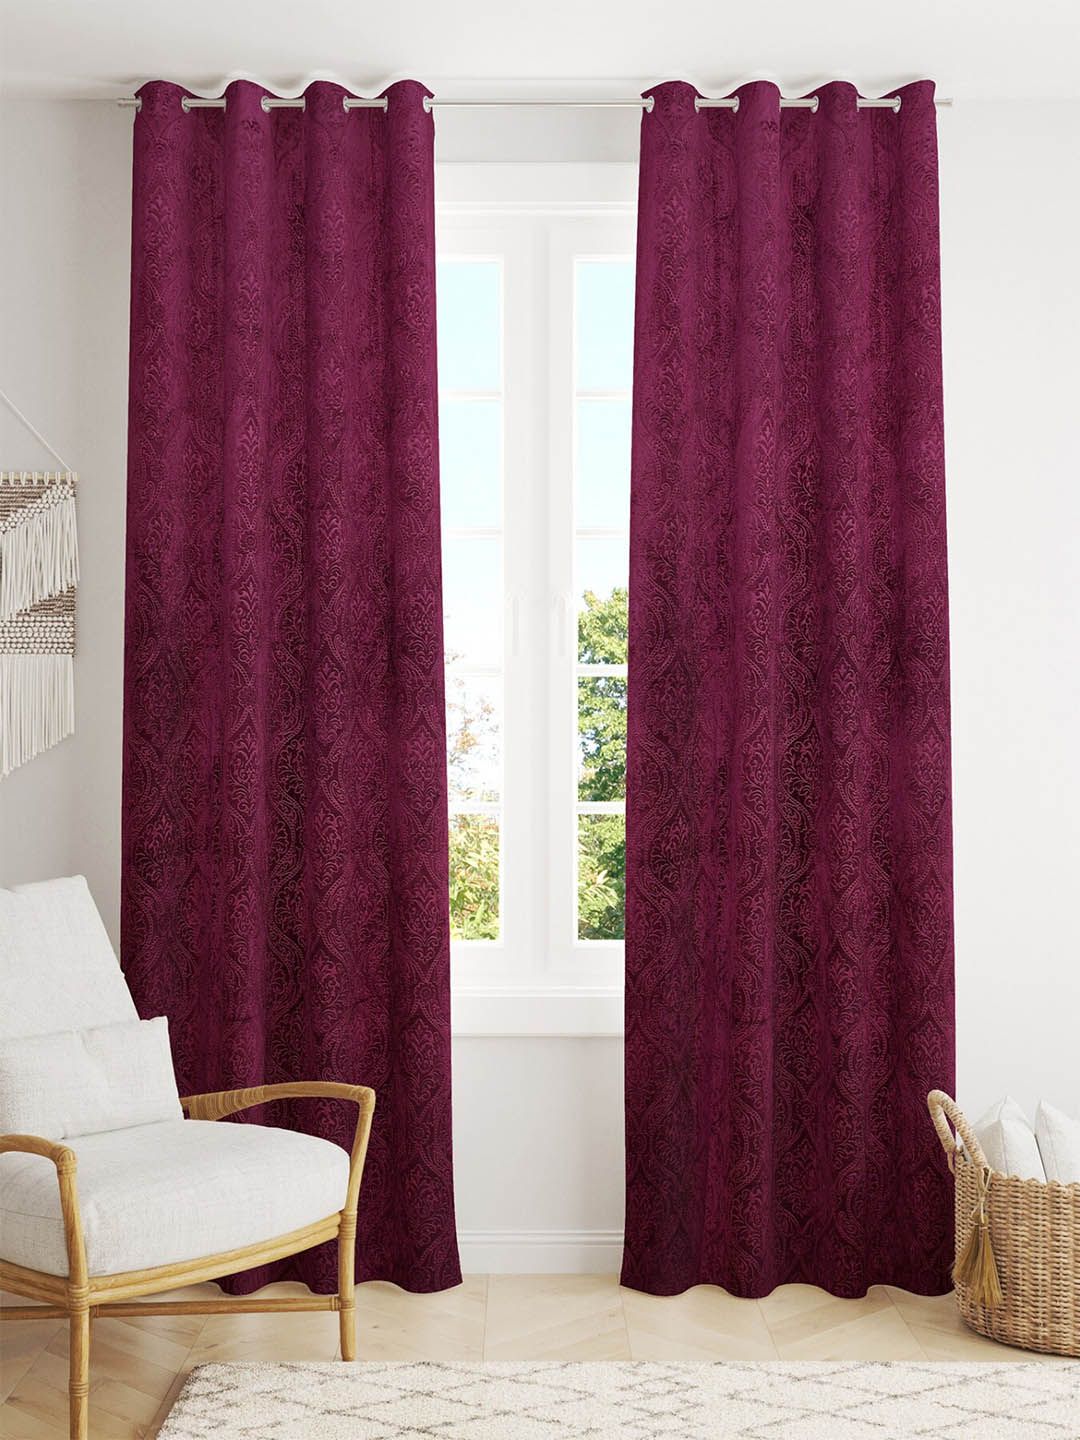 Homefab India Burgundy Set of 2 Room Darkening Window Curtain Price in India